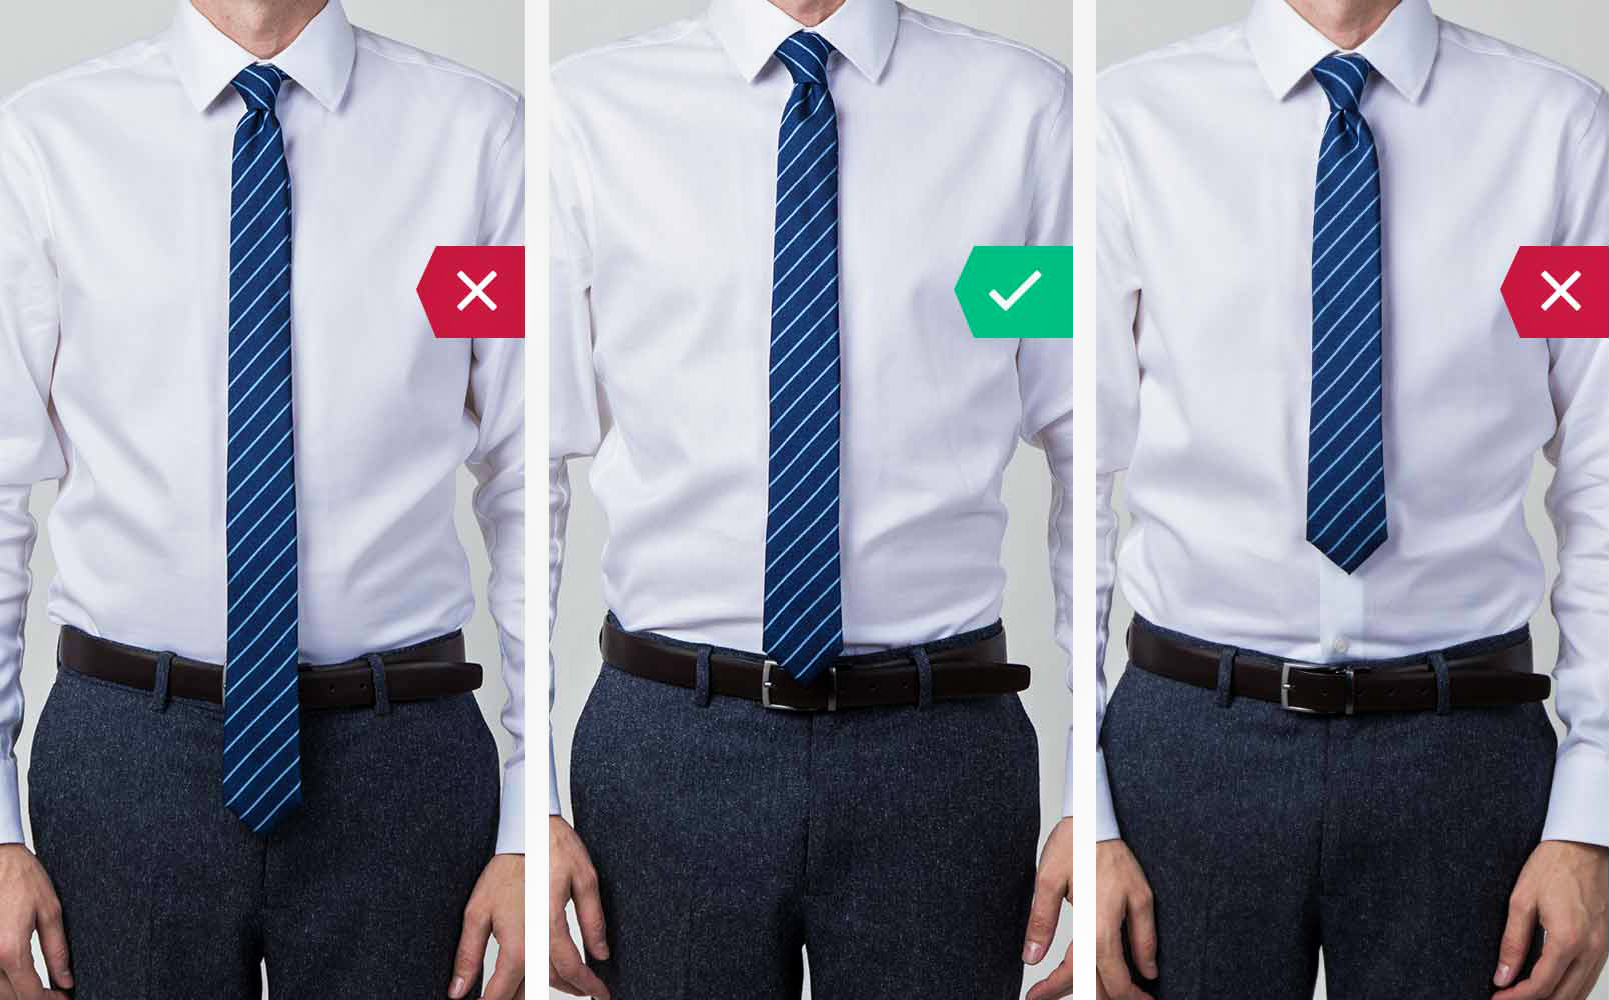 proper tie length: wrong tie length vs. correct tie length